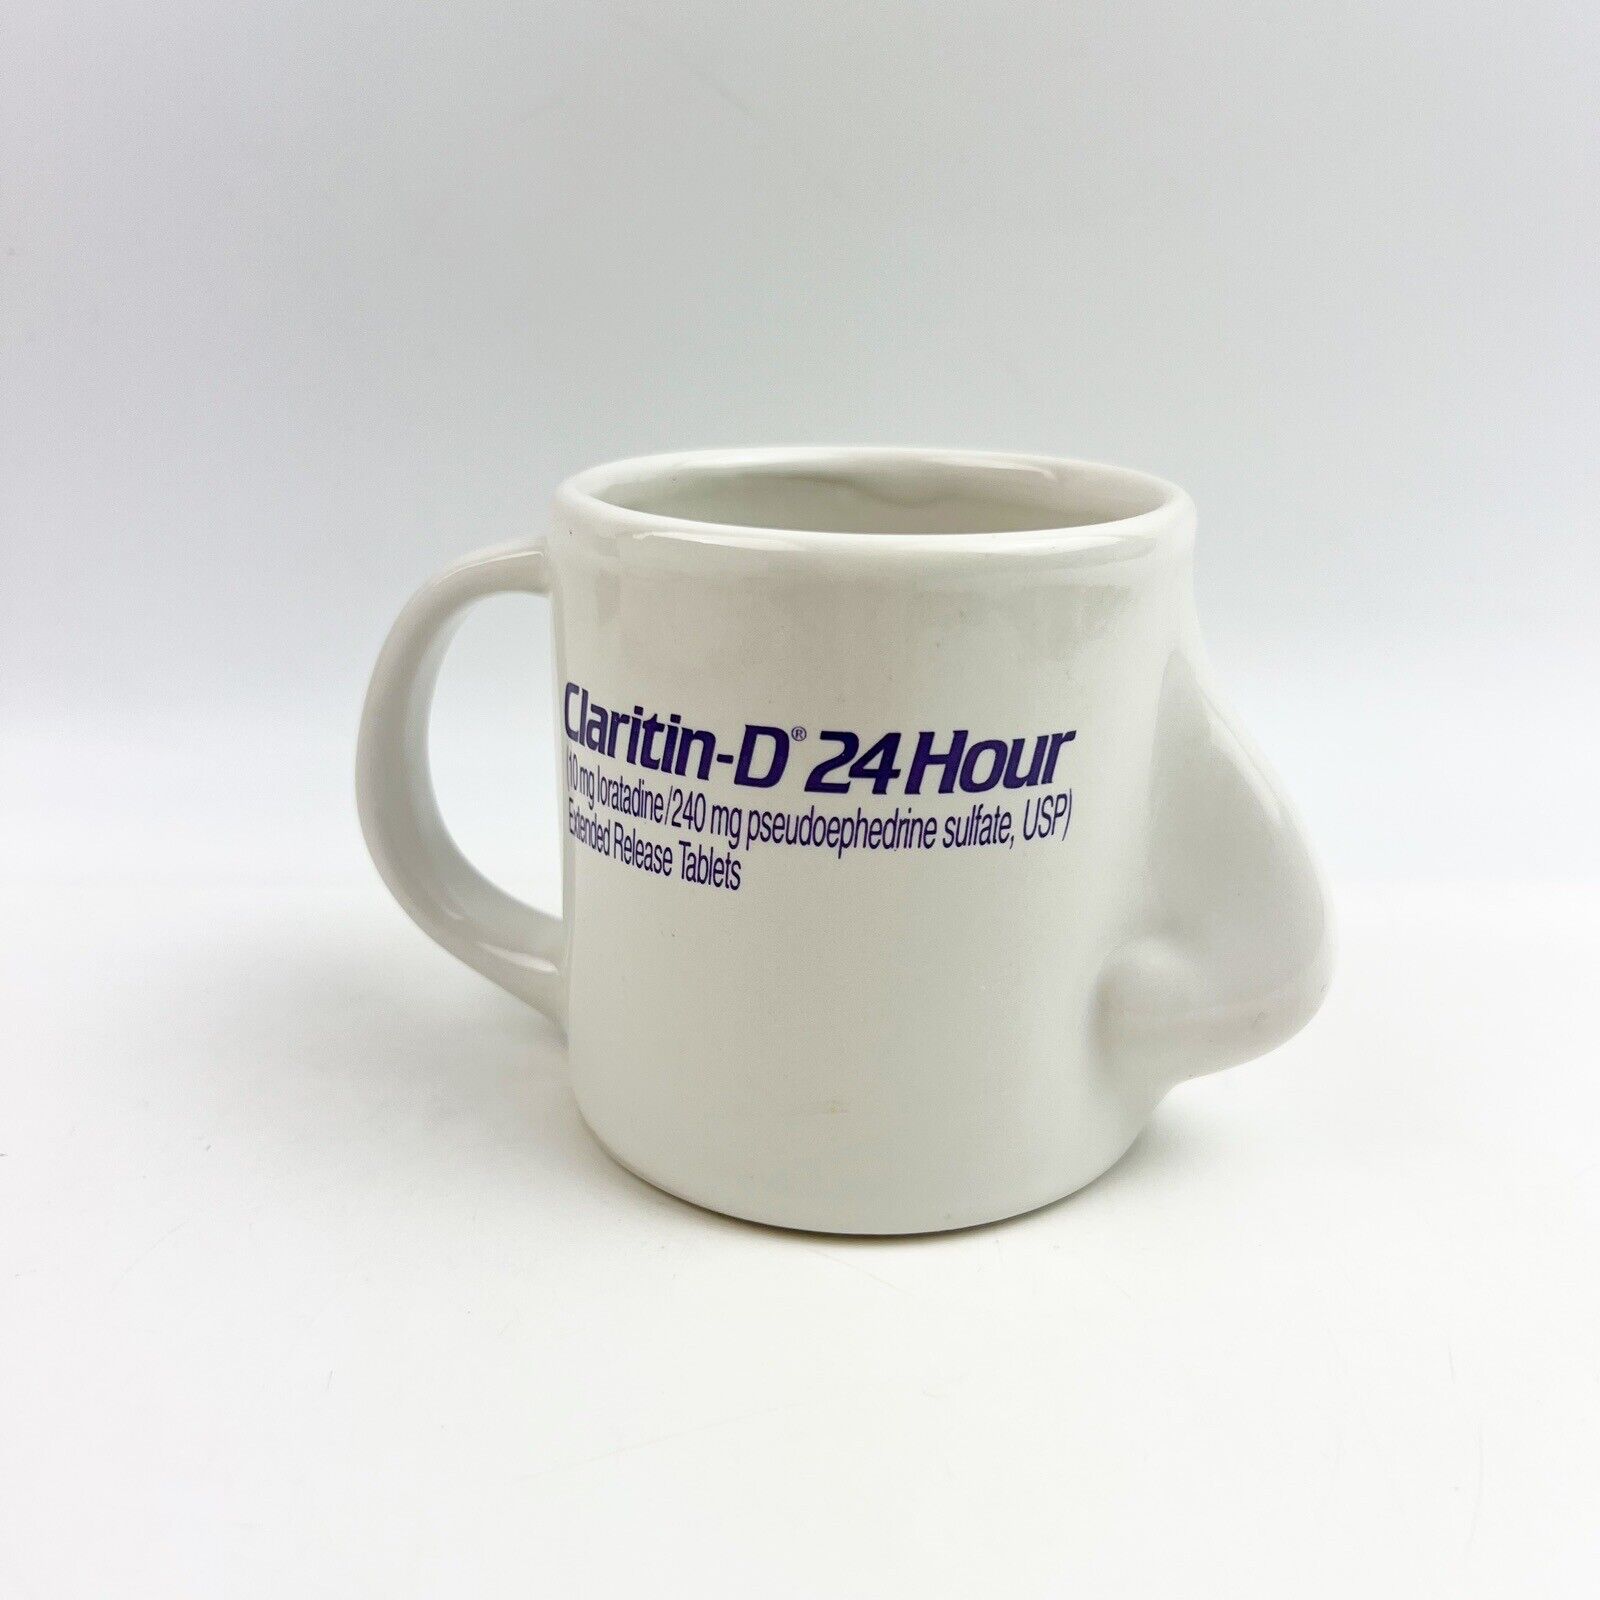 Claritin-D 24 Hour Coffee Mug Cup 3D Nose Rep Advertising Pharma White Blue